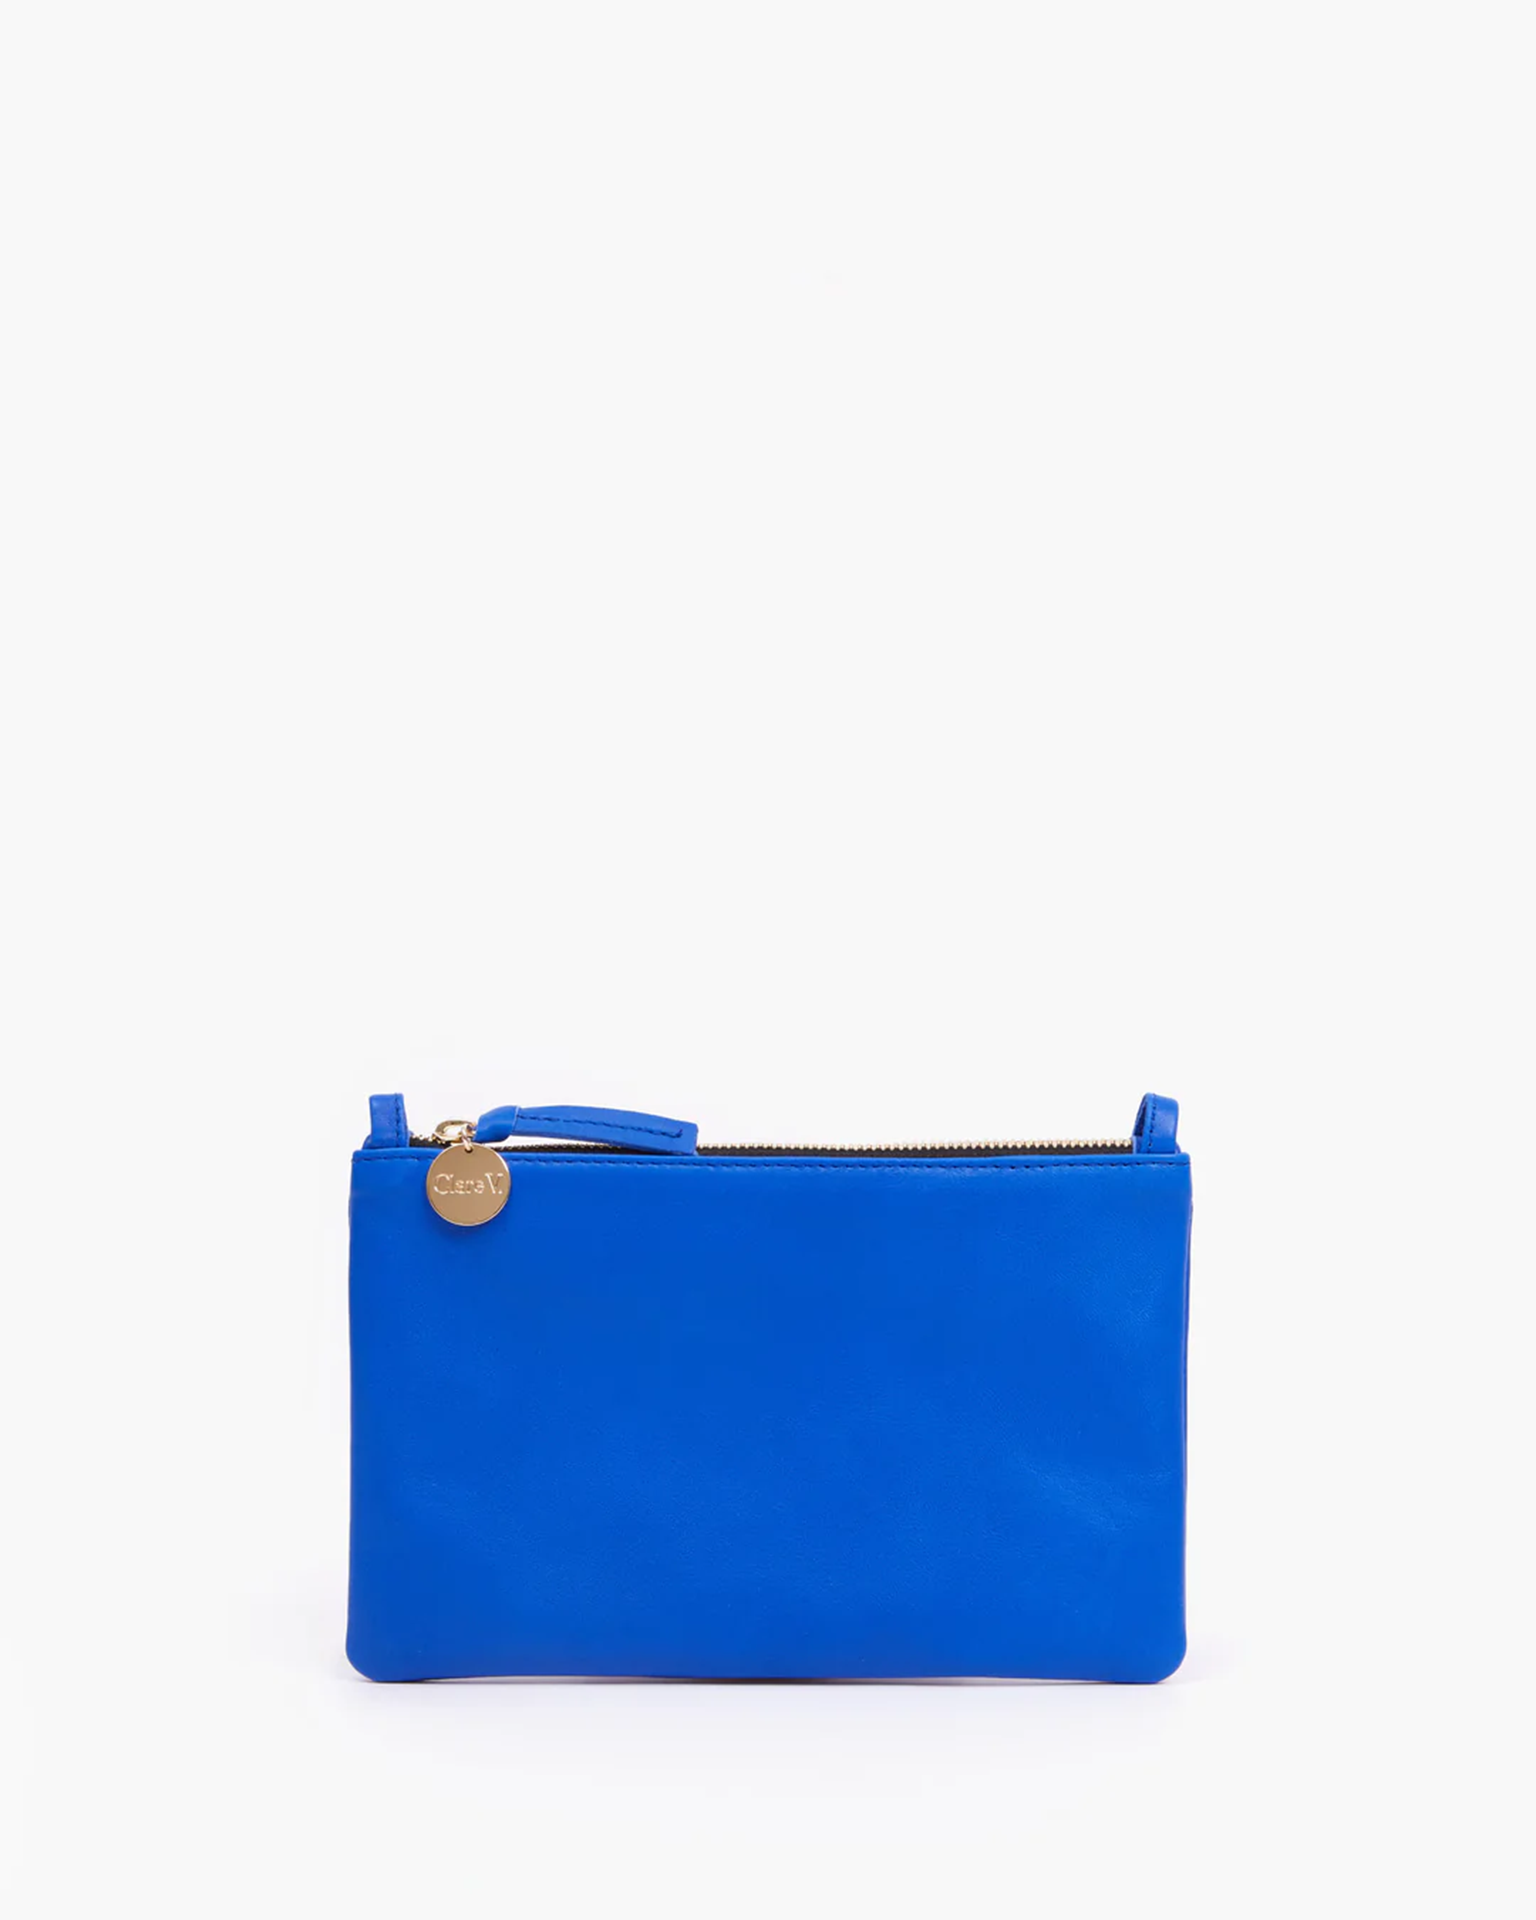 Cobalt Blue Leather wristlet wallet clutch